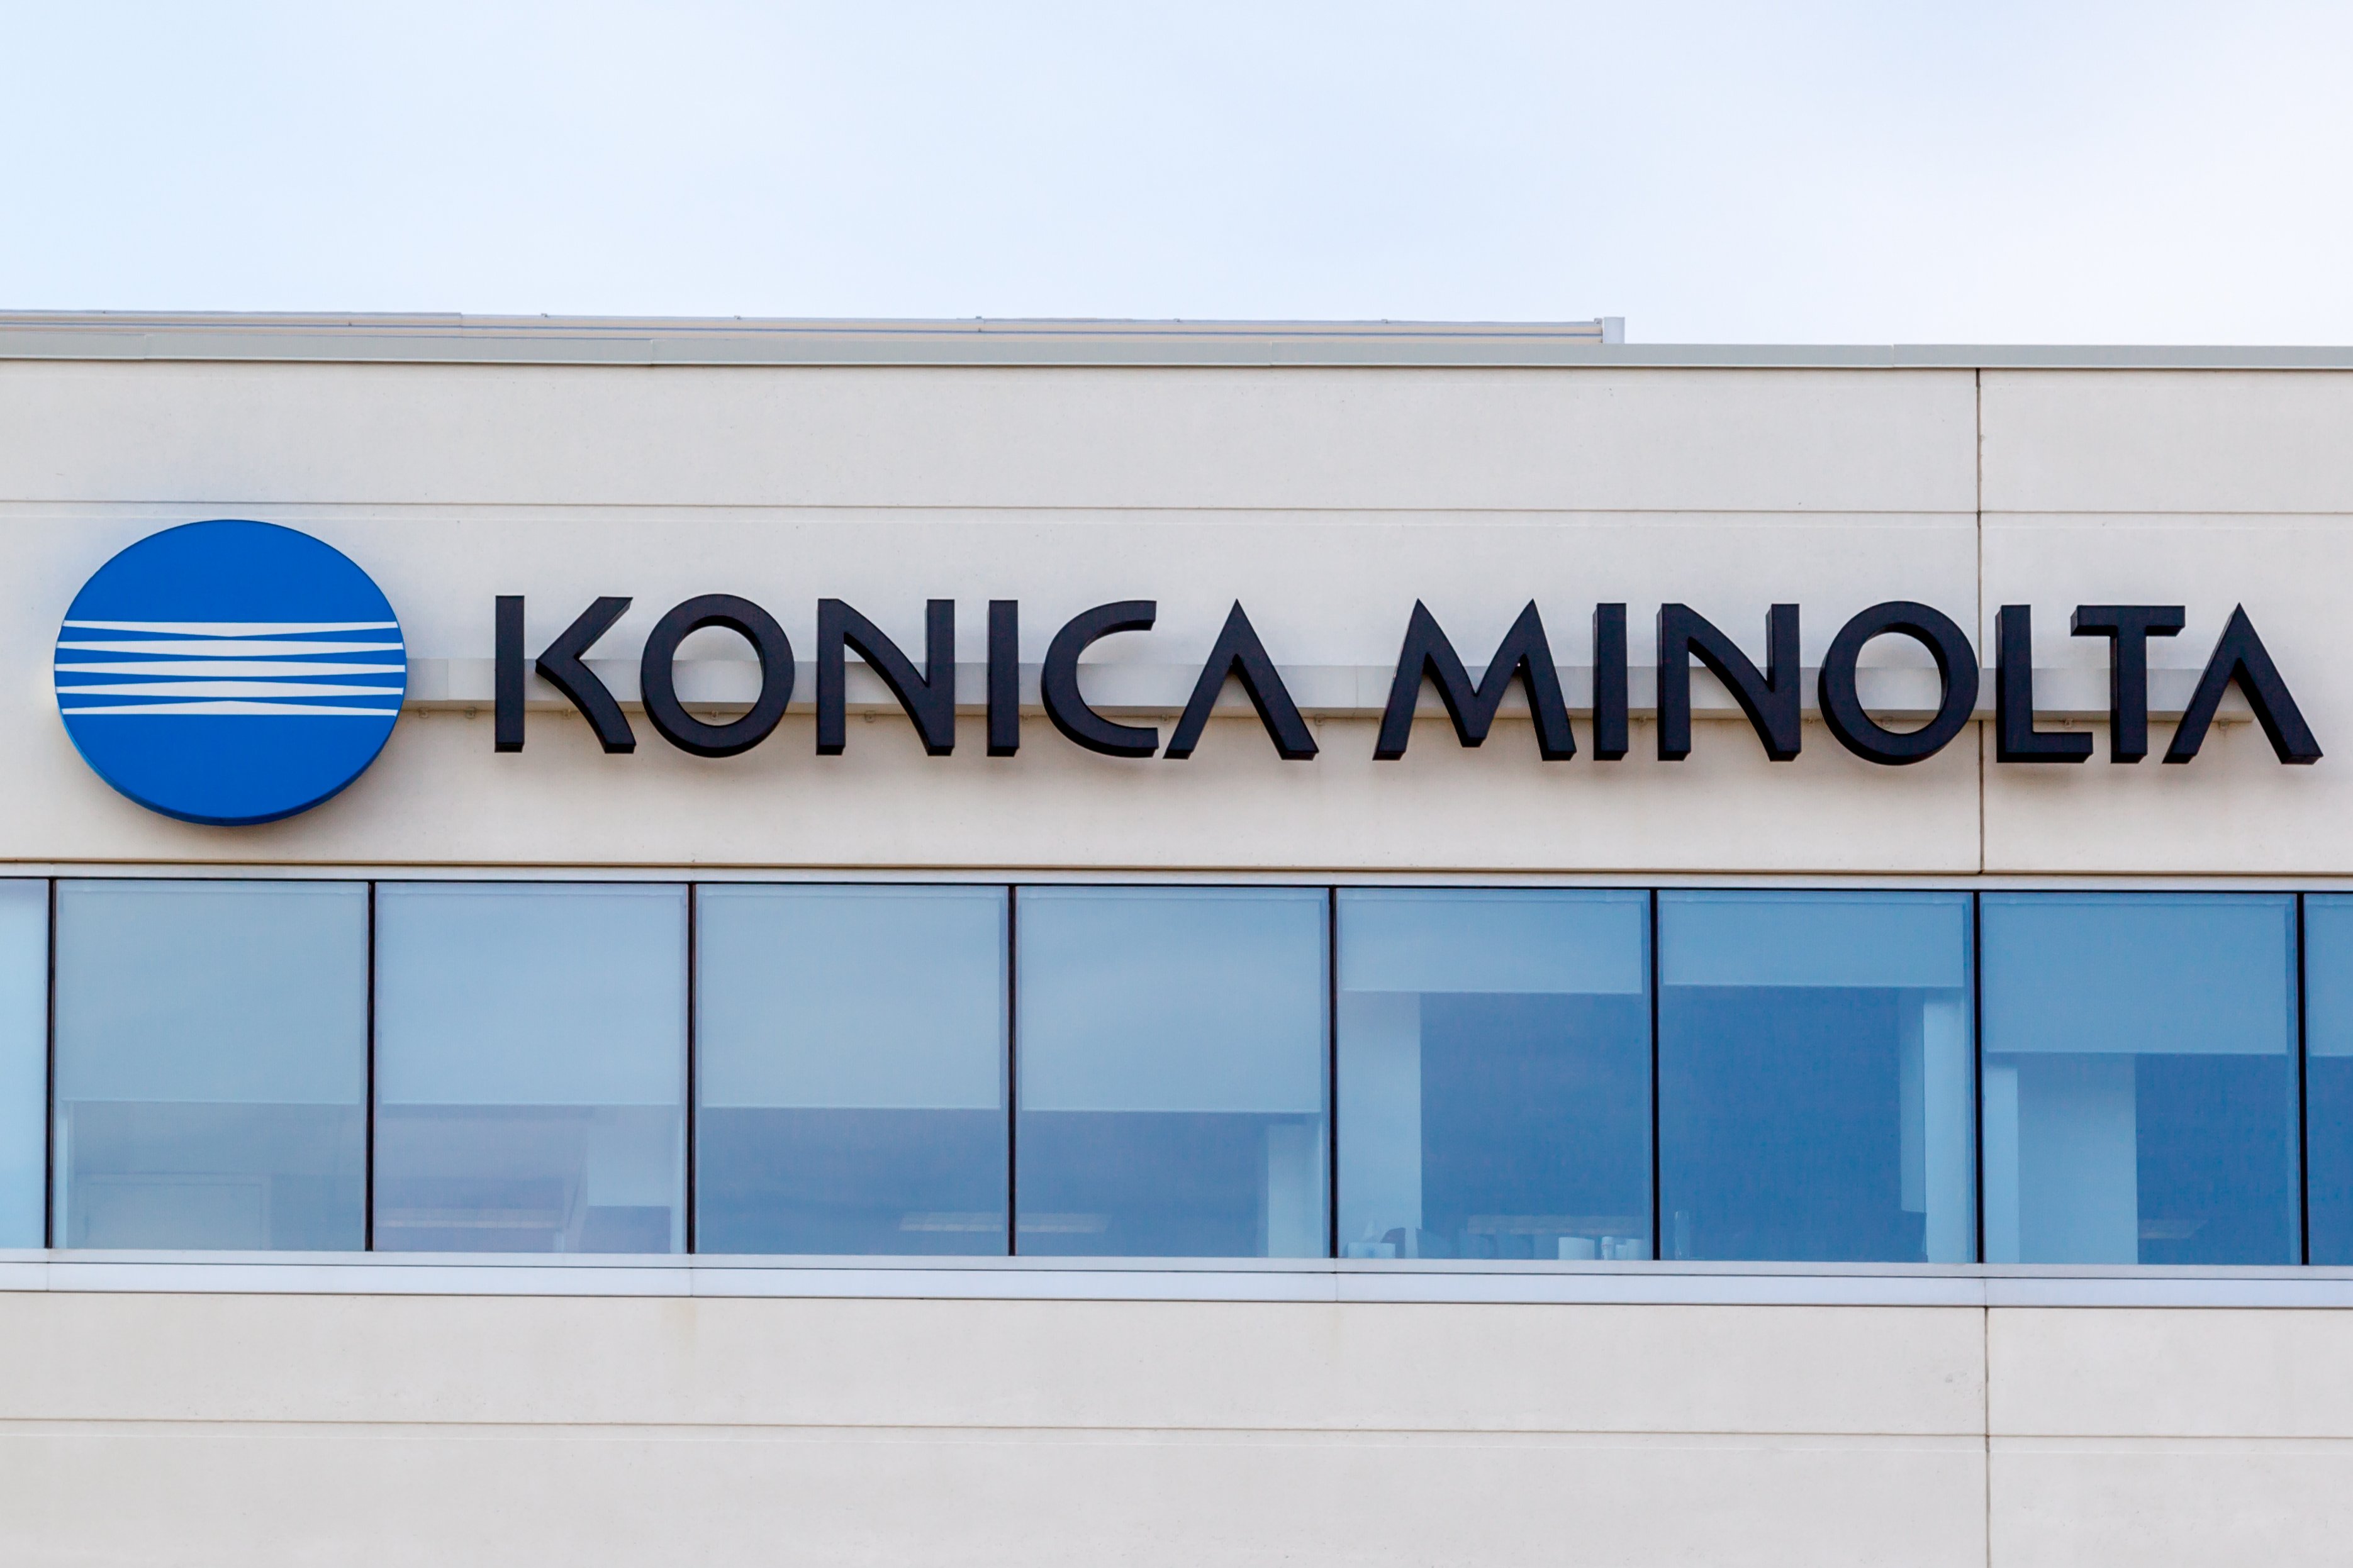 3.29 Konica Minolta Embedded Enhancements